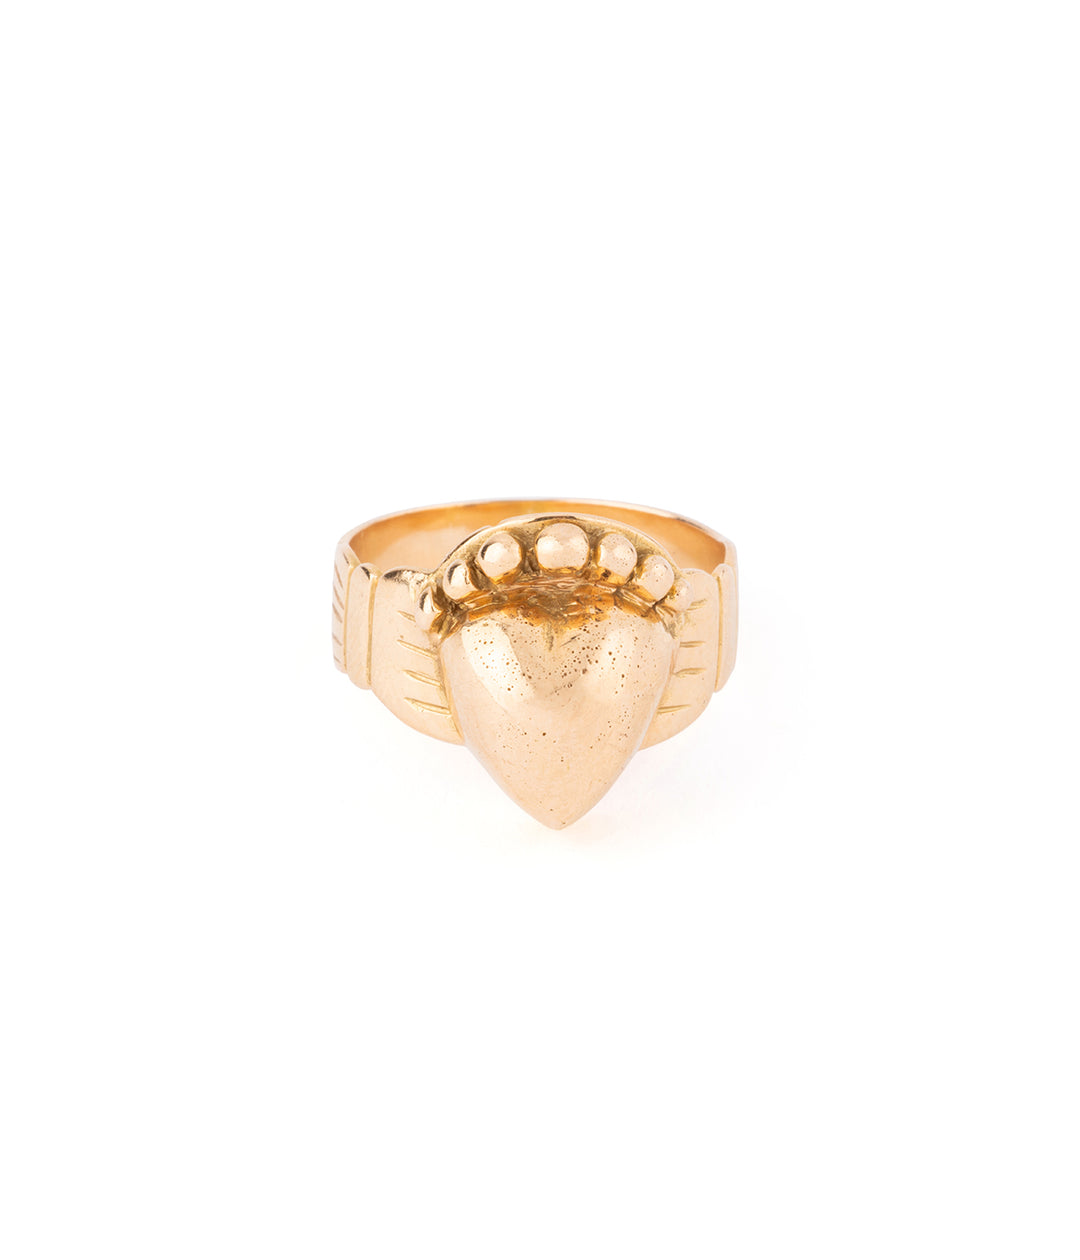 Antique traditionnal engagement ring "Myrta" - Caillou Paris 